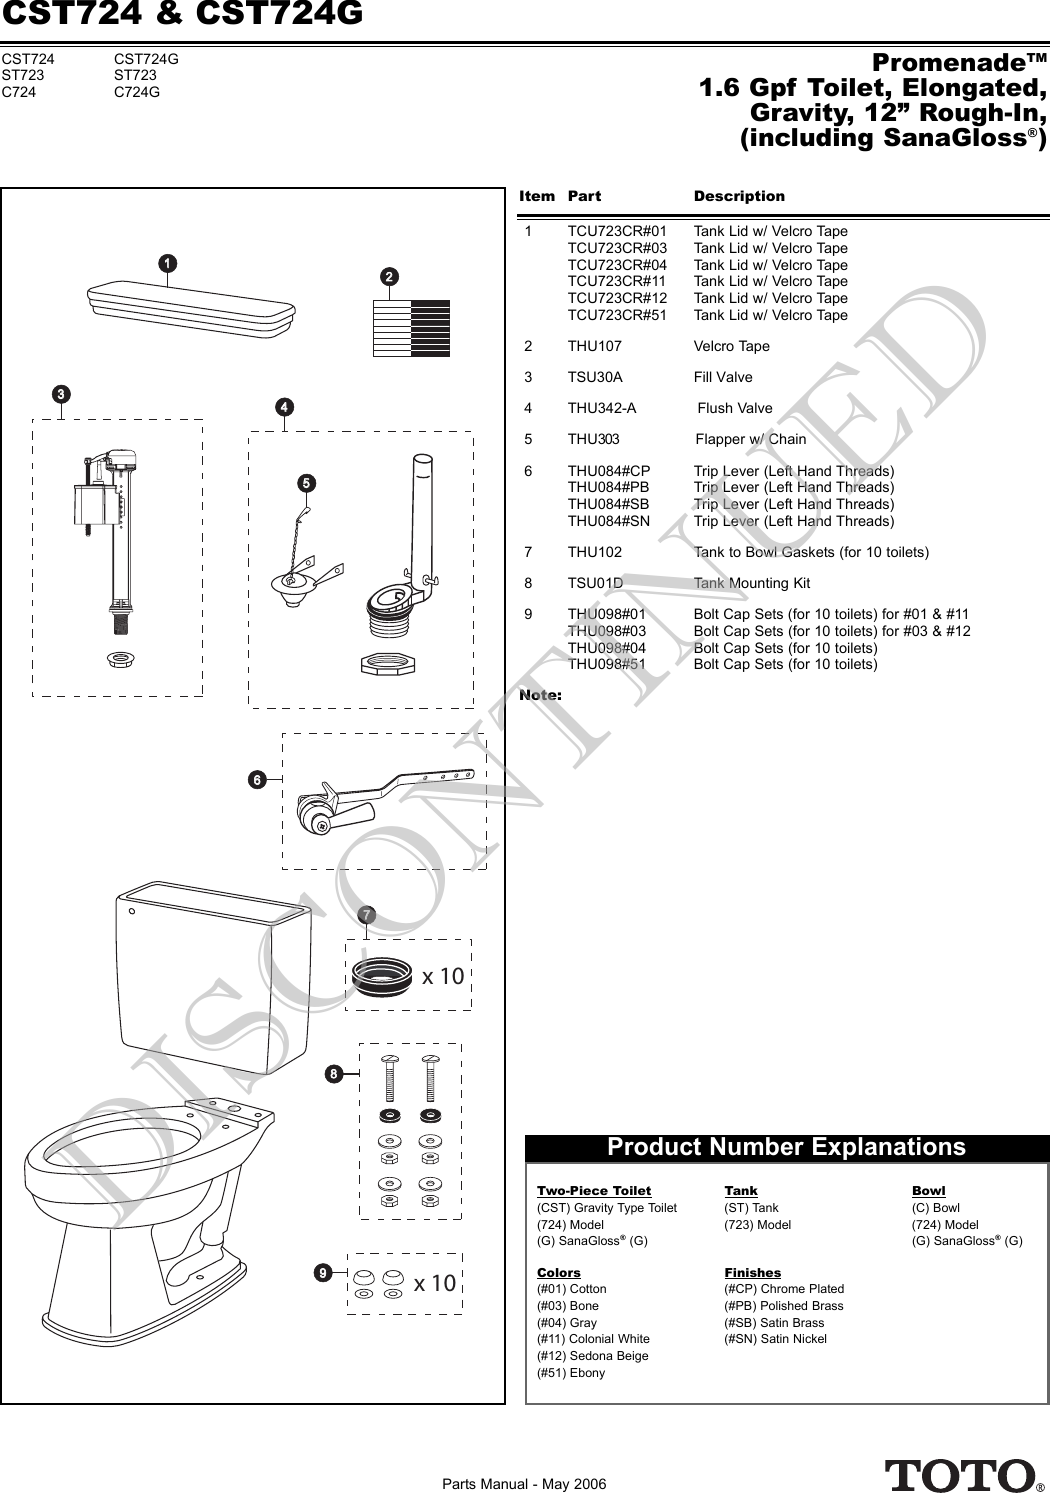 Page 1 of 1 - 2006 Parts Manual.qxp  PD-00234 CST724 CST724G DISC